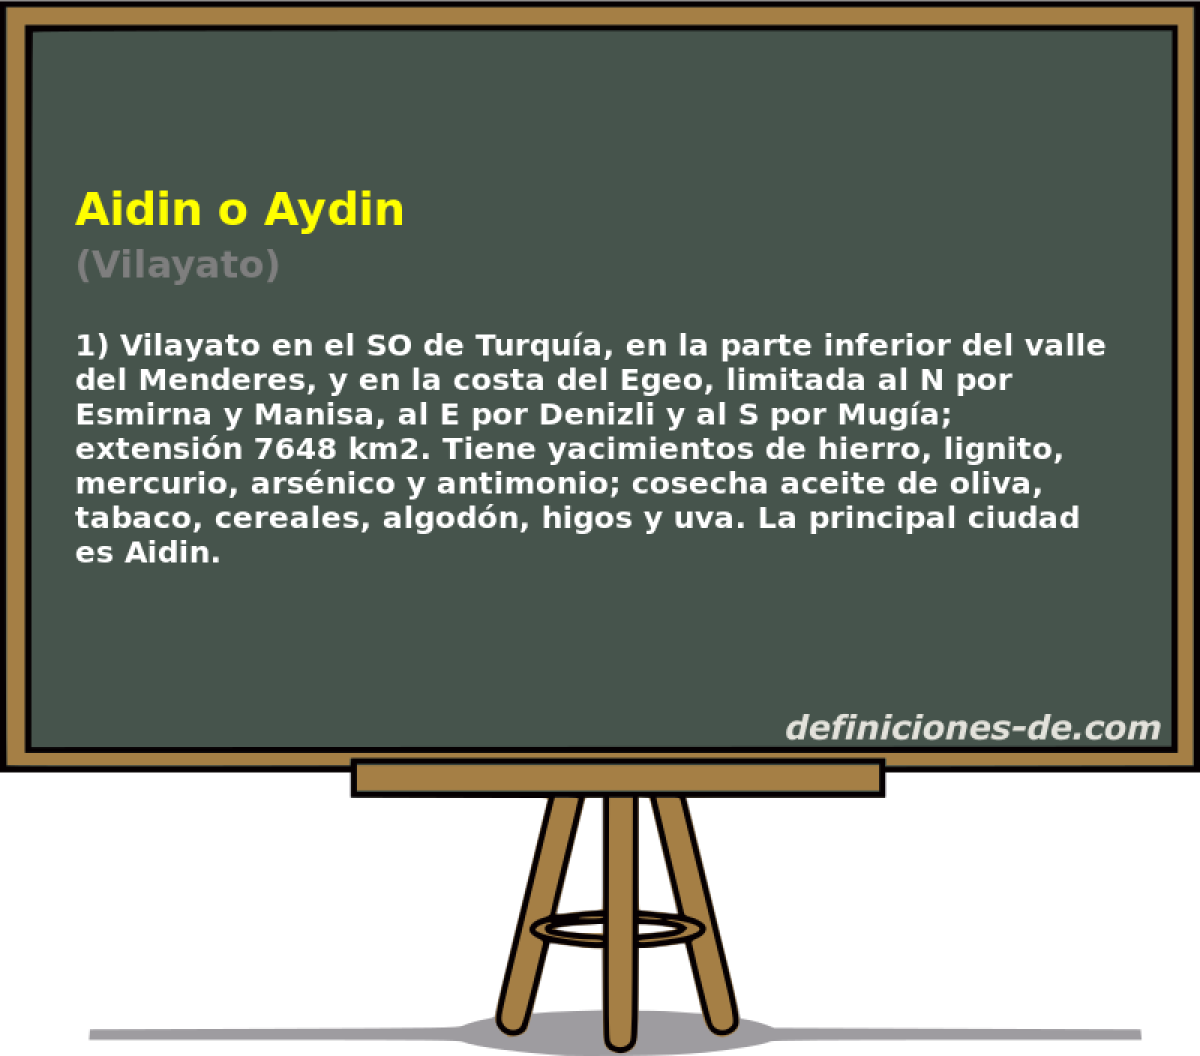 Aidin o Aydin (Vilayato)